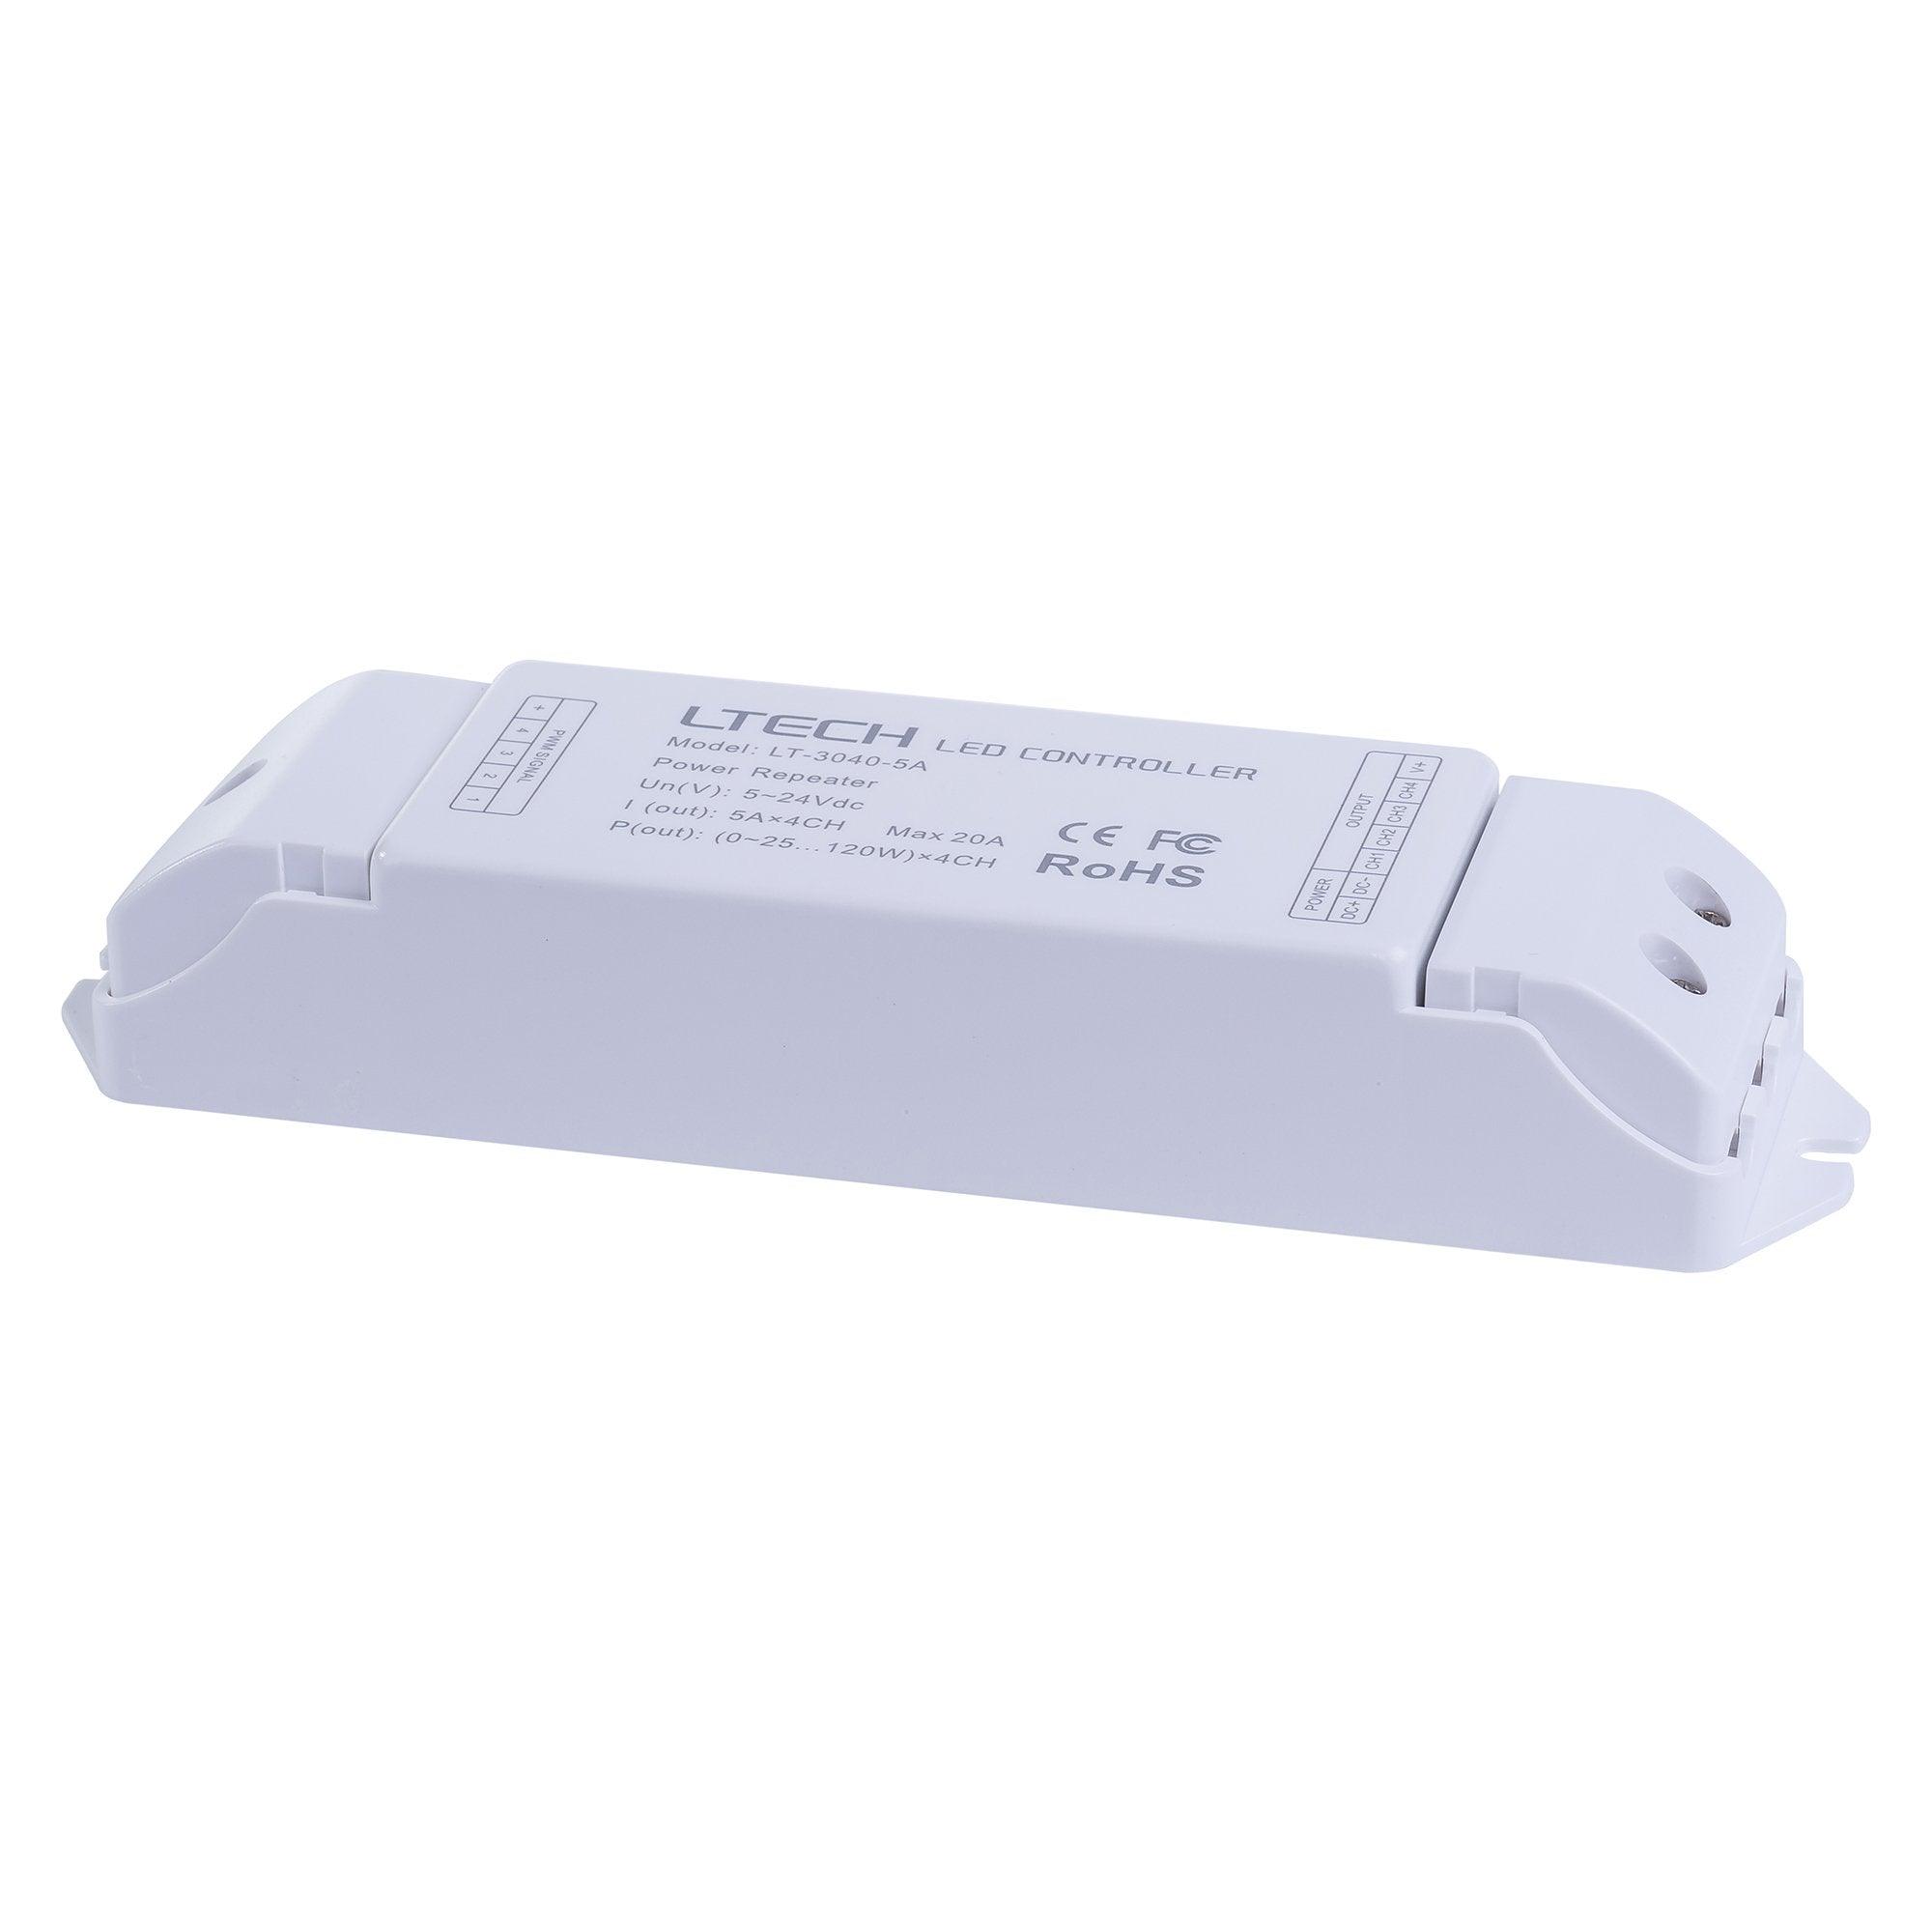 Havit Lighting LED Strip Controllers White 4 Channel LED Strip Repeater by Havit Lighting - HV9104-LT-3040-5A Lights-For-You HV9104-LT-3040-5A